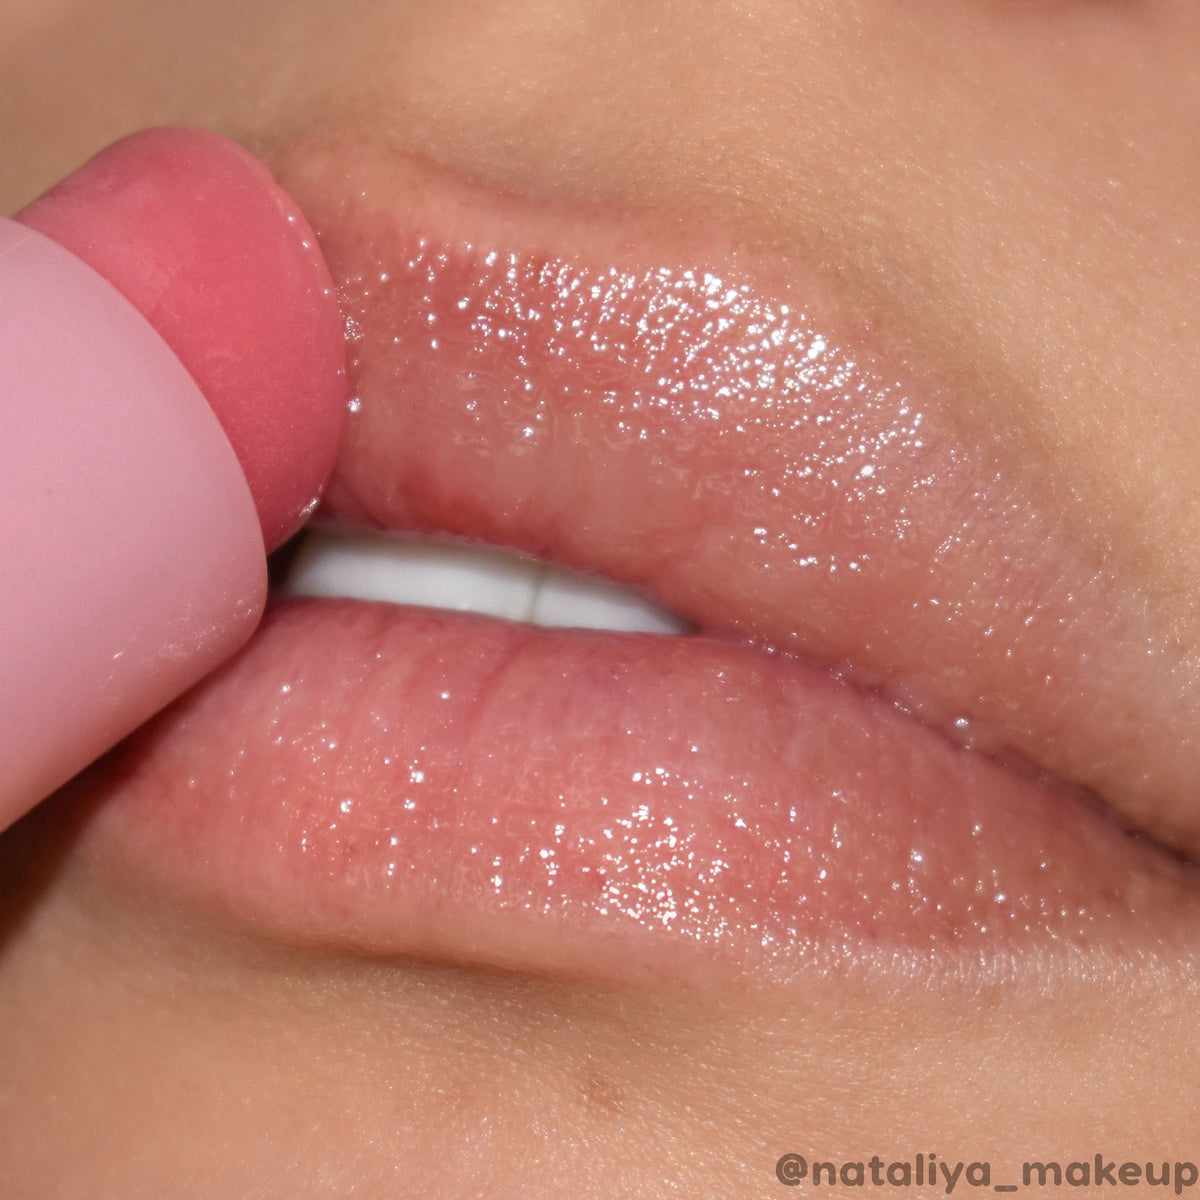 Chlapu Chlap Juicy Lip Balm - Strawberry Lip Gloss, raspberry